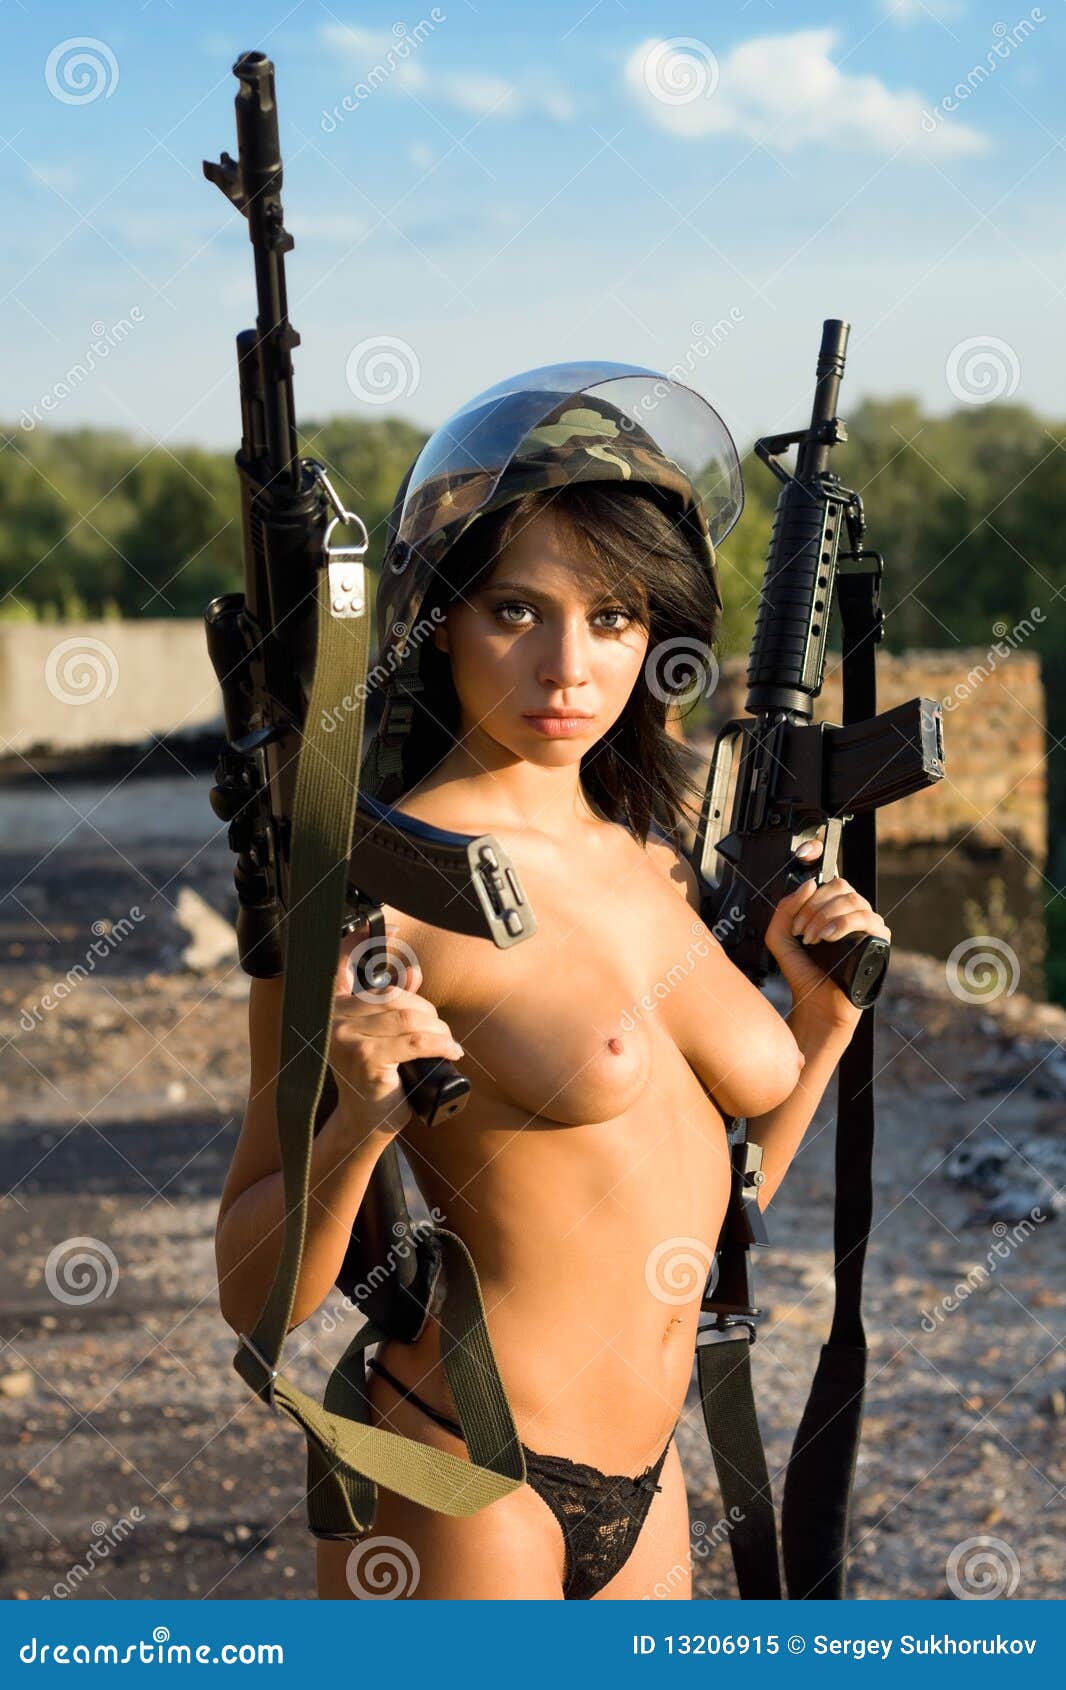 Hot naked girls with guns